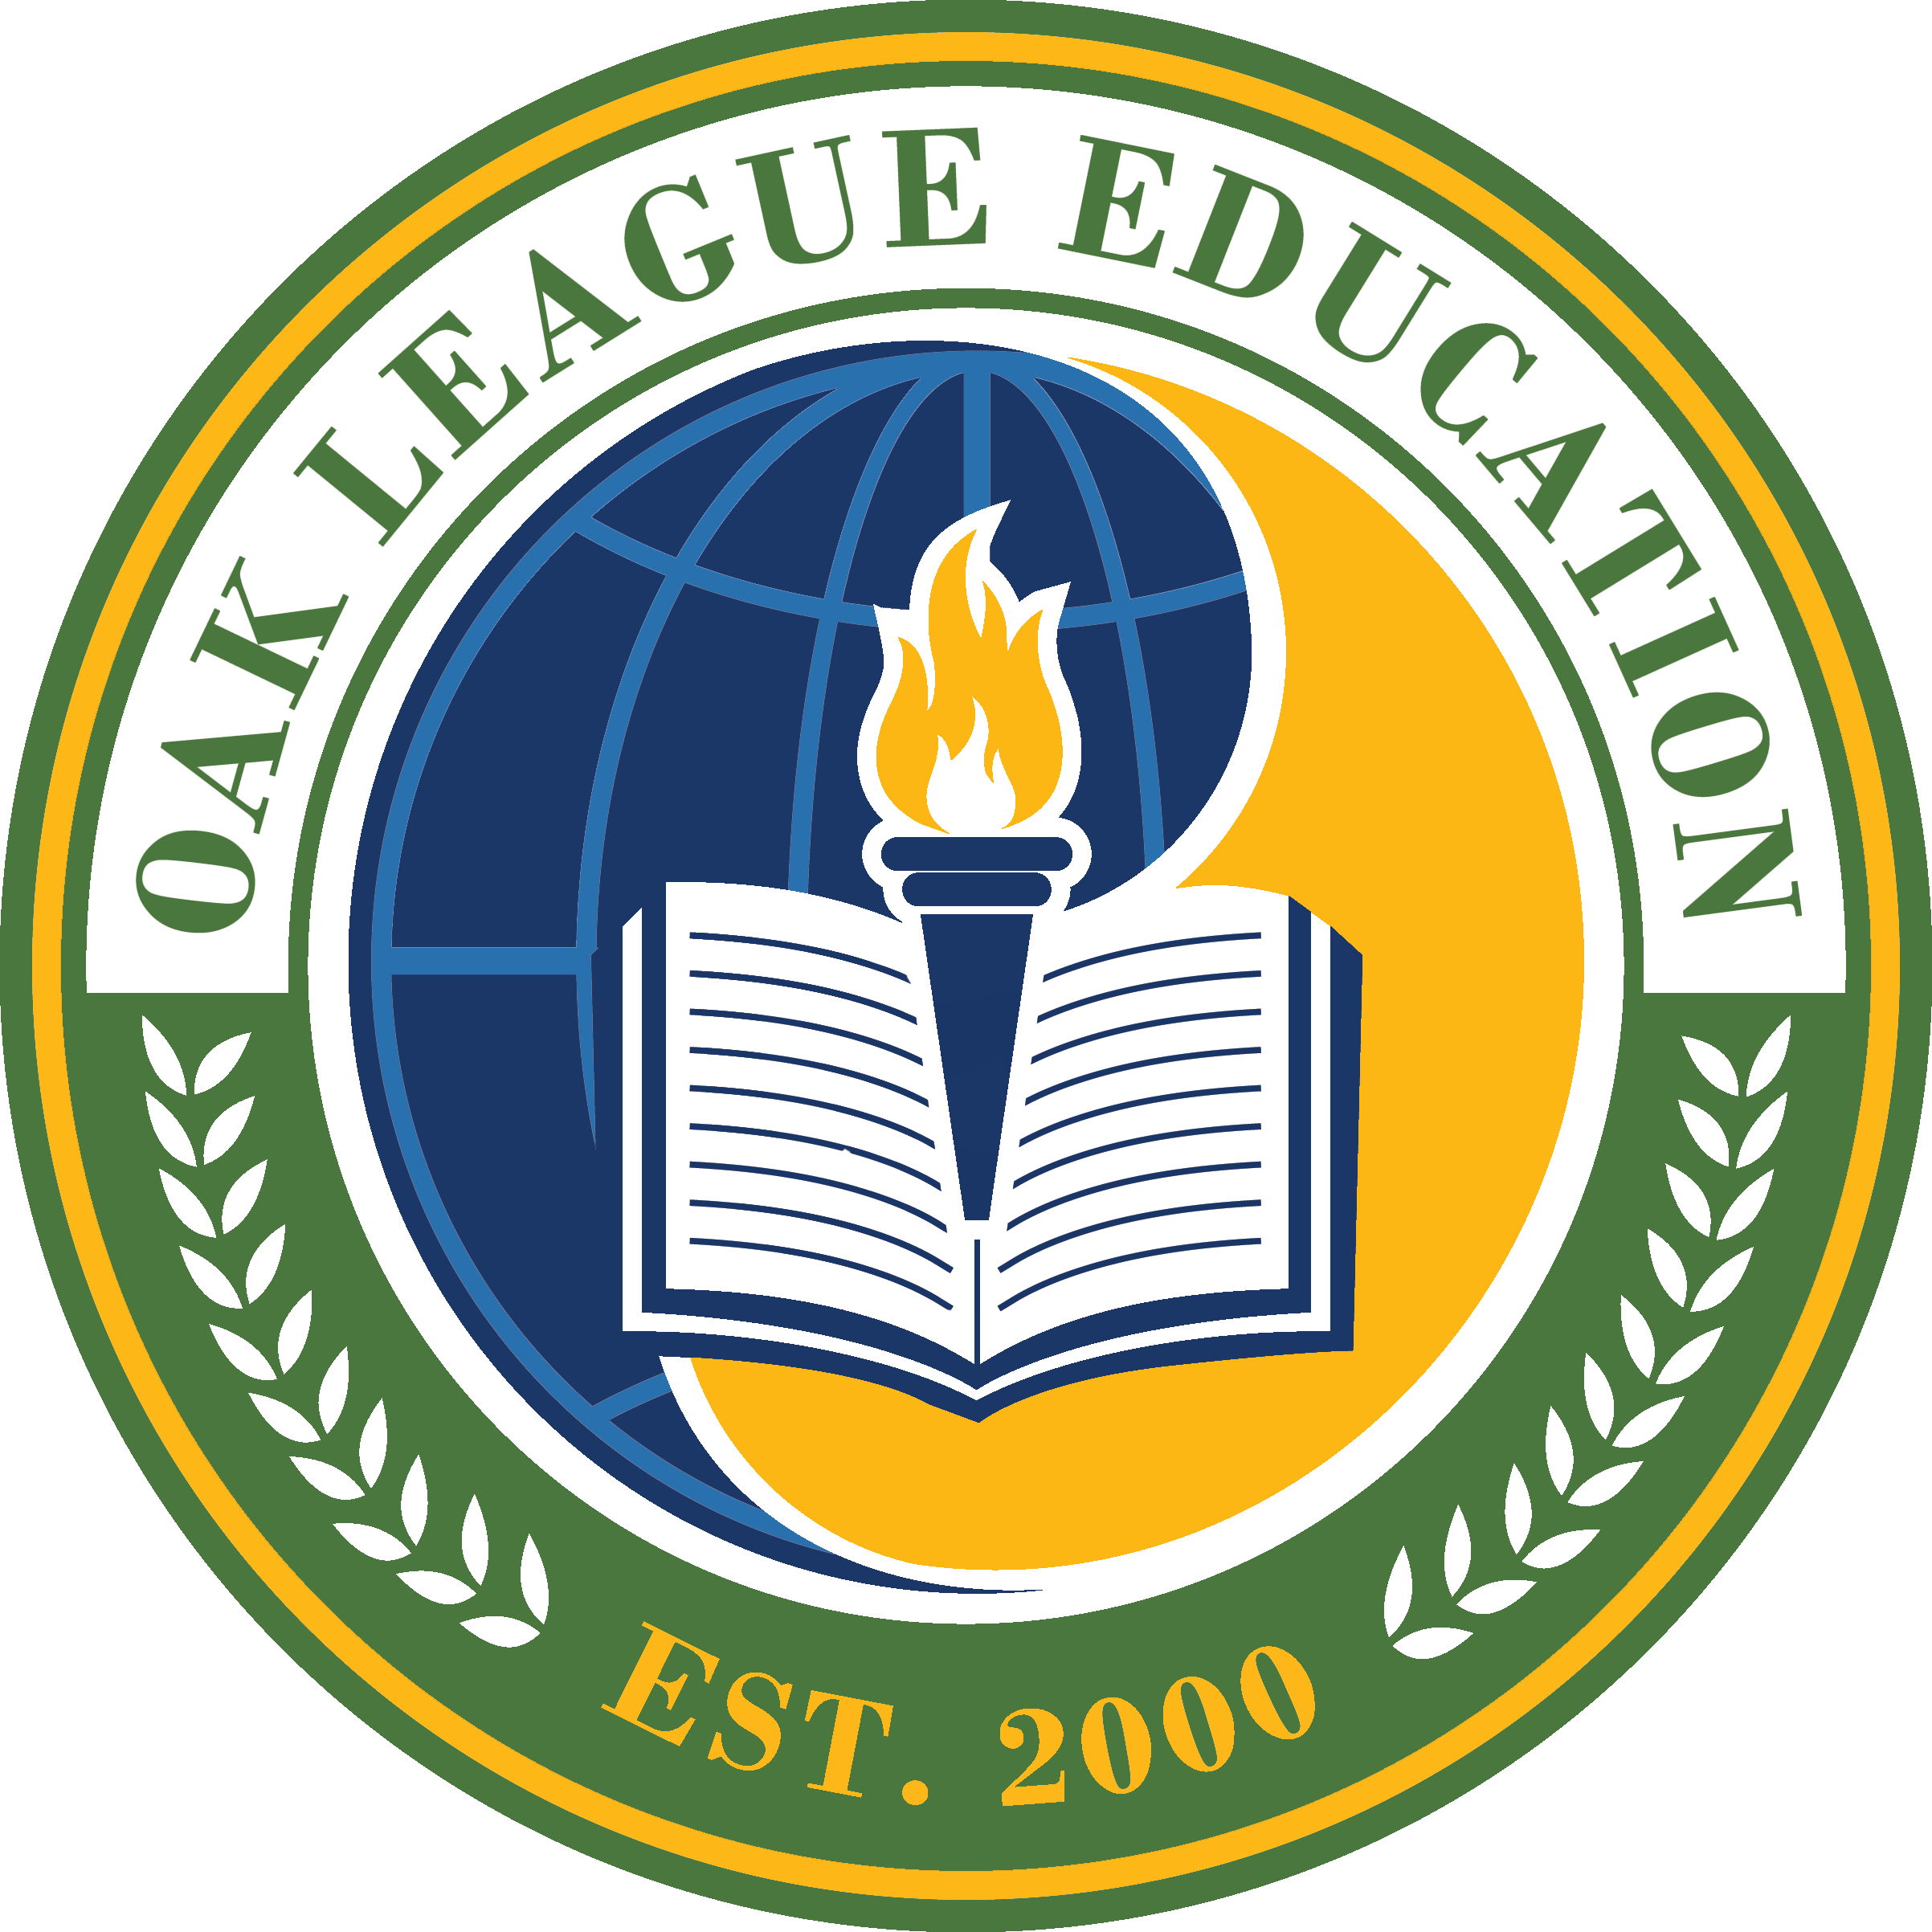 Oak League Education Institute